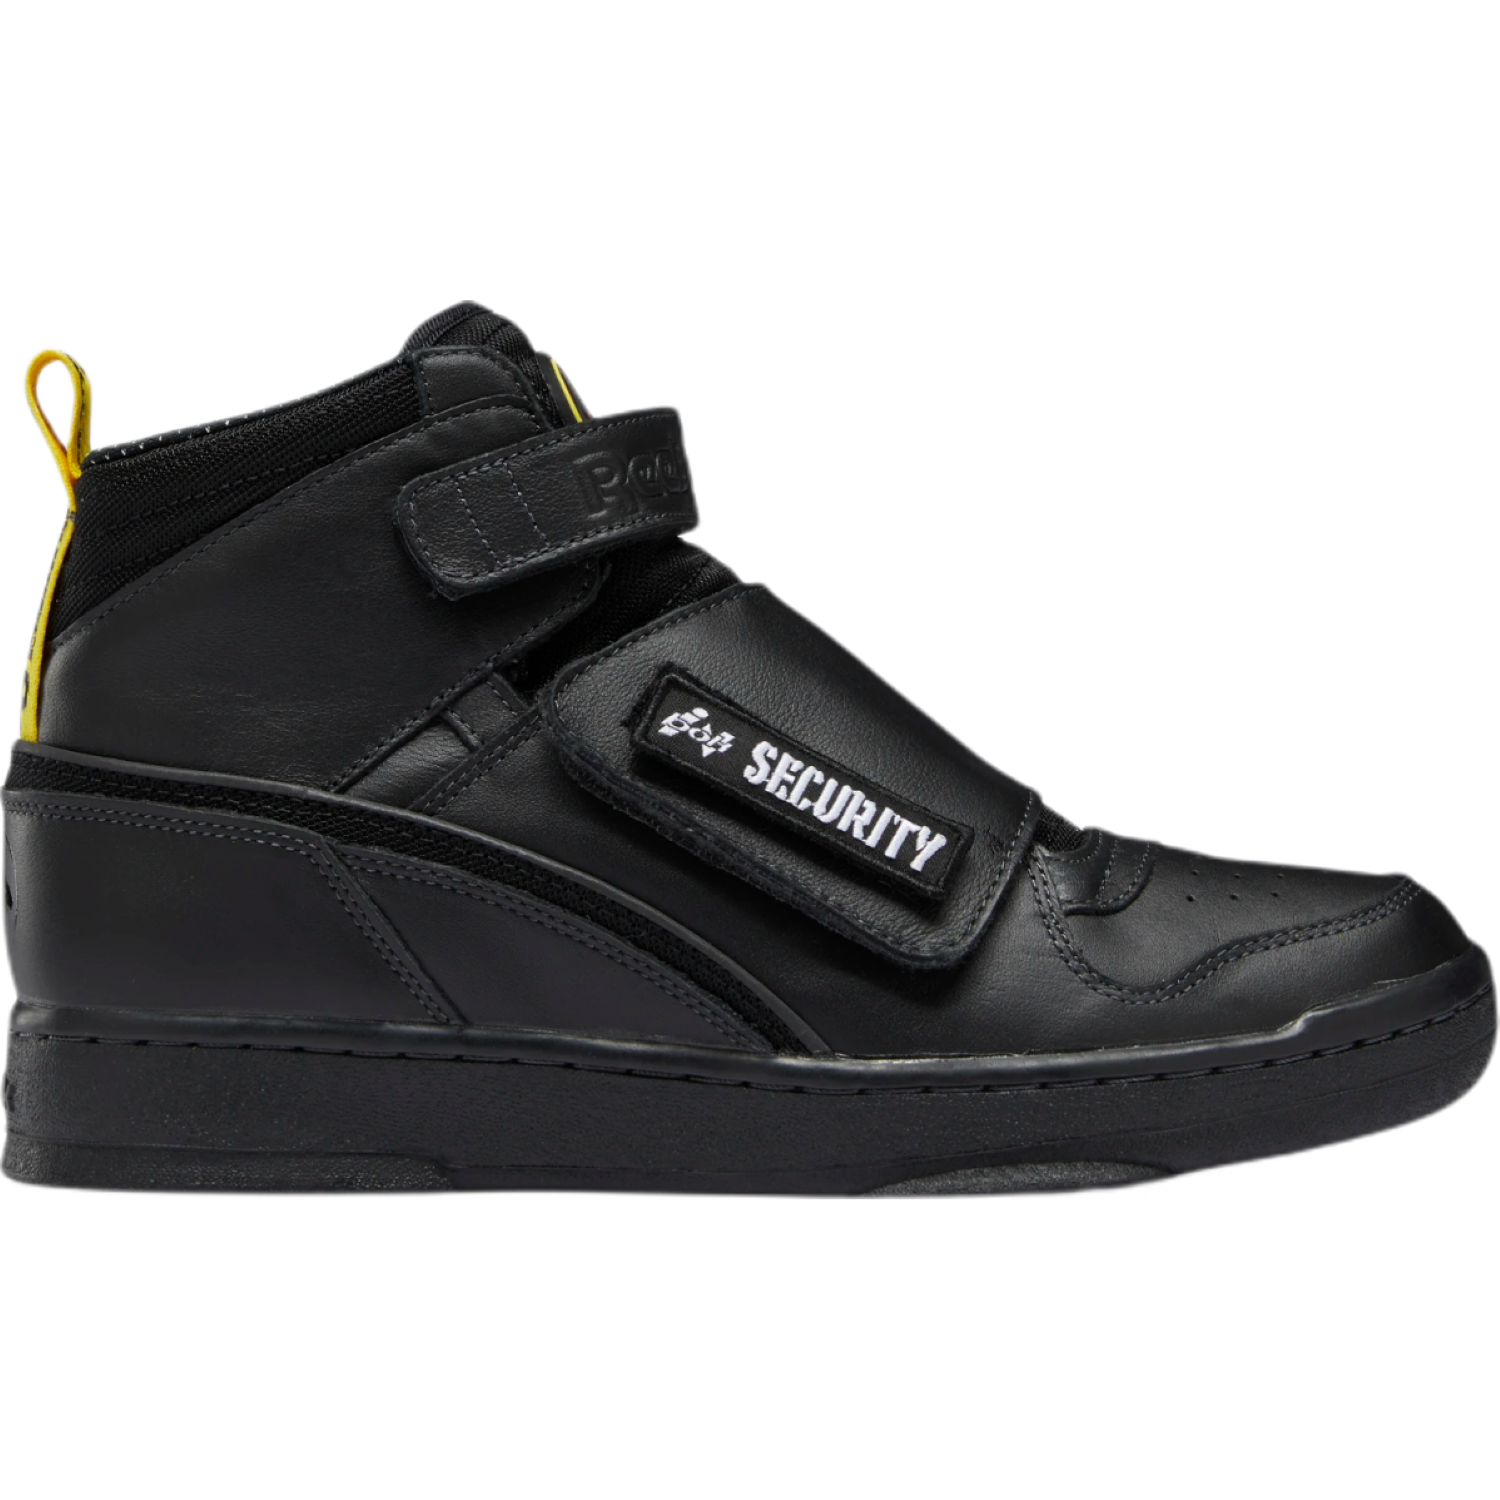 Reebok Classics Jurassic Park Stomper Leather Shoes in Black